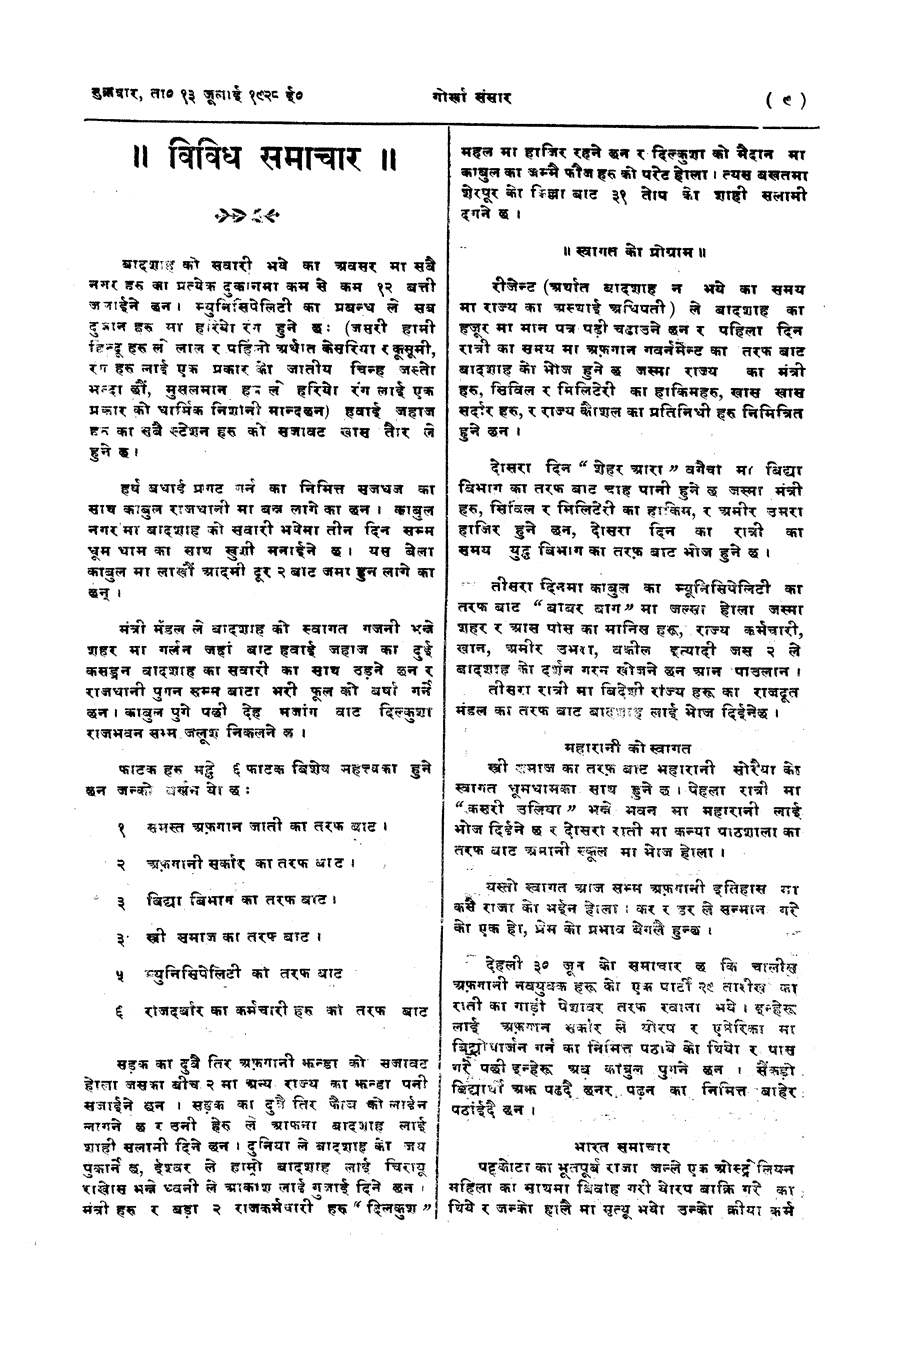 Gorkha Sansar, 13 July 1928, page 9